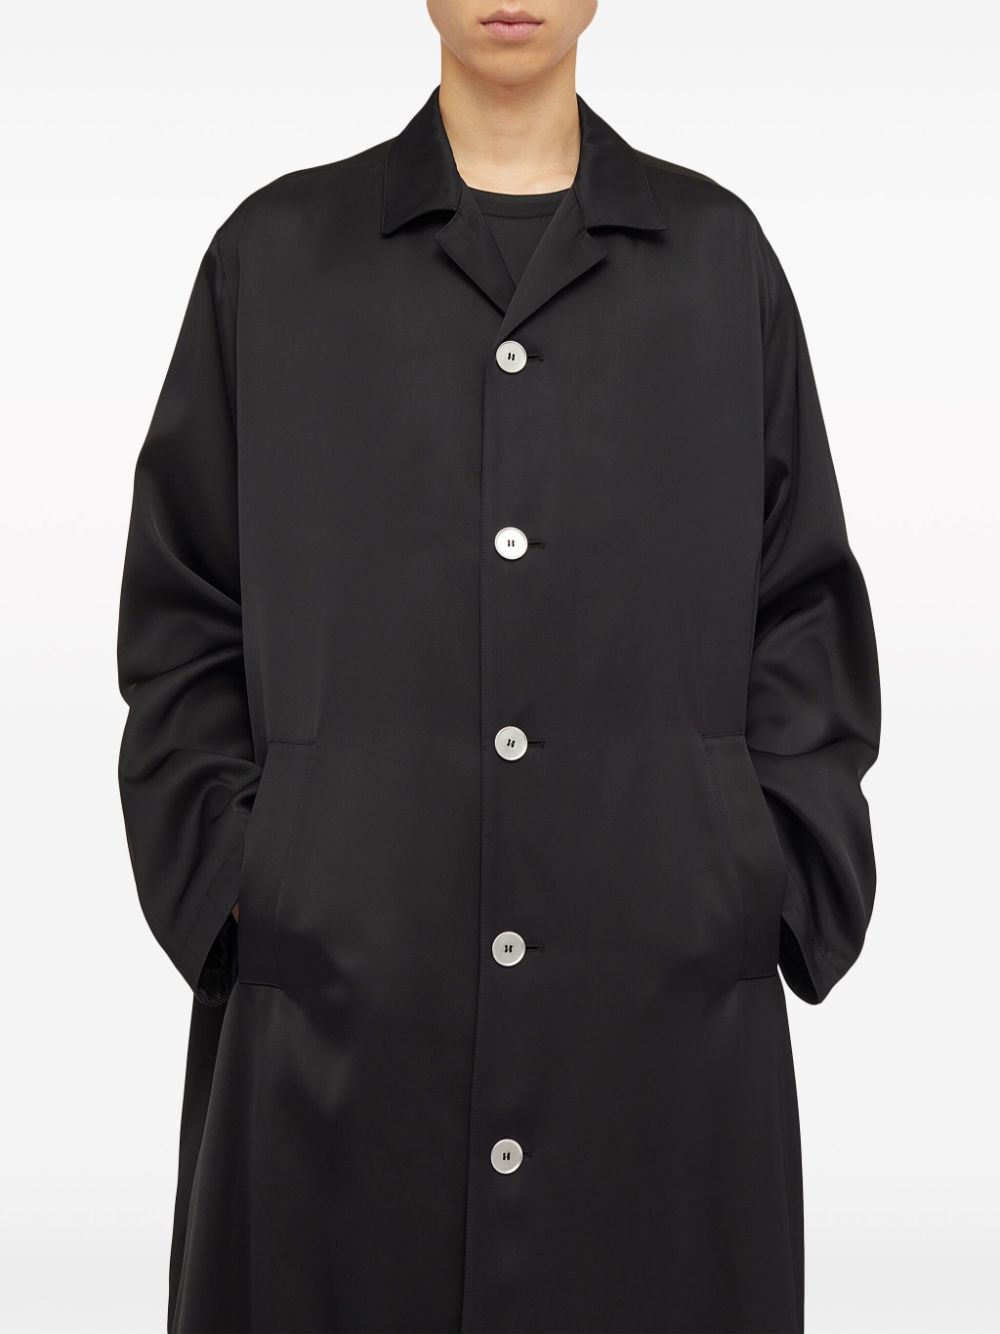 Black single-breasted coat